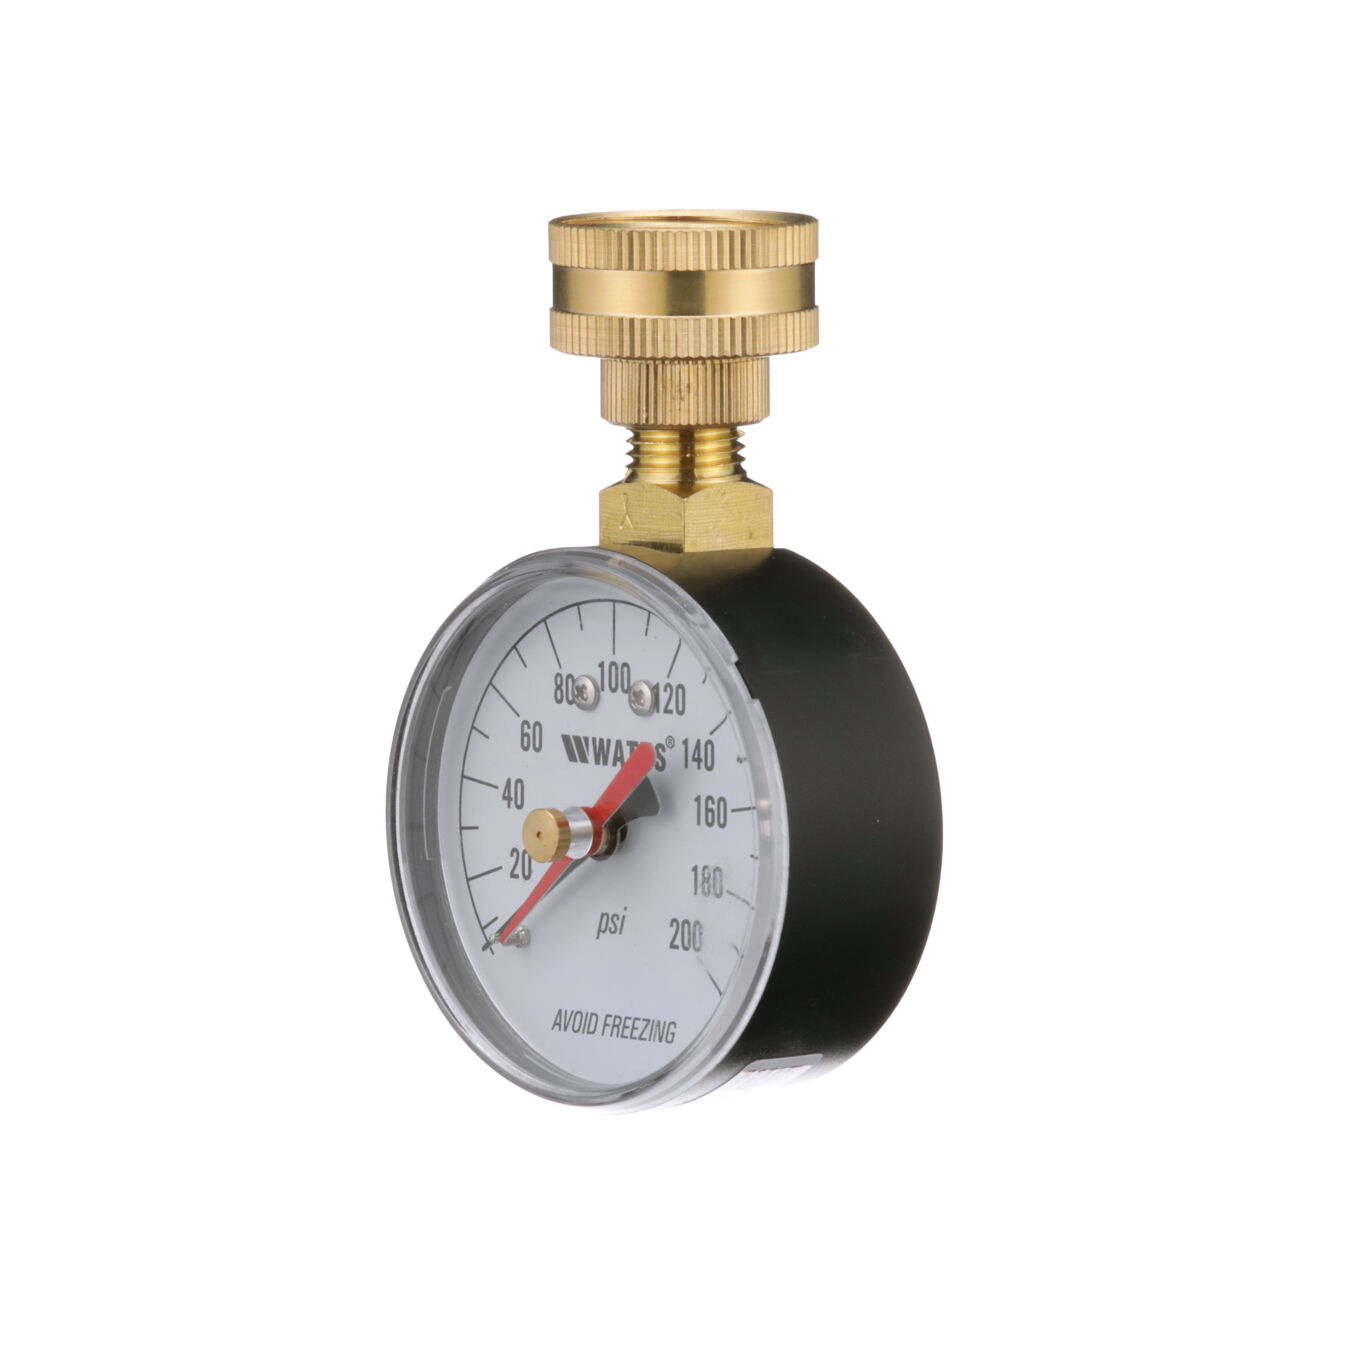 Pressure gauge showing right side.